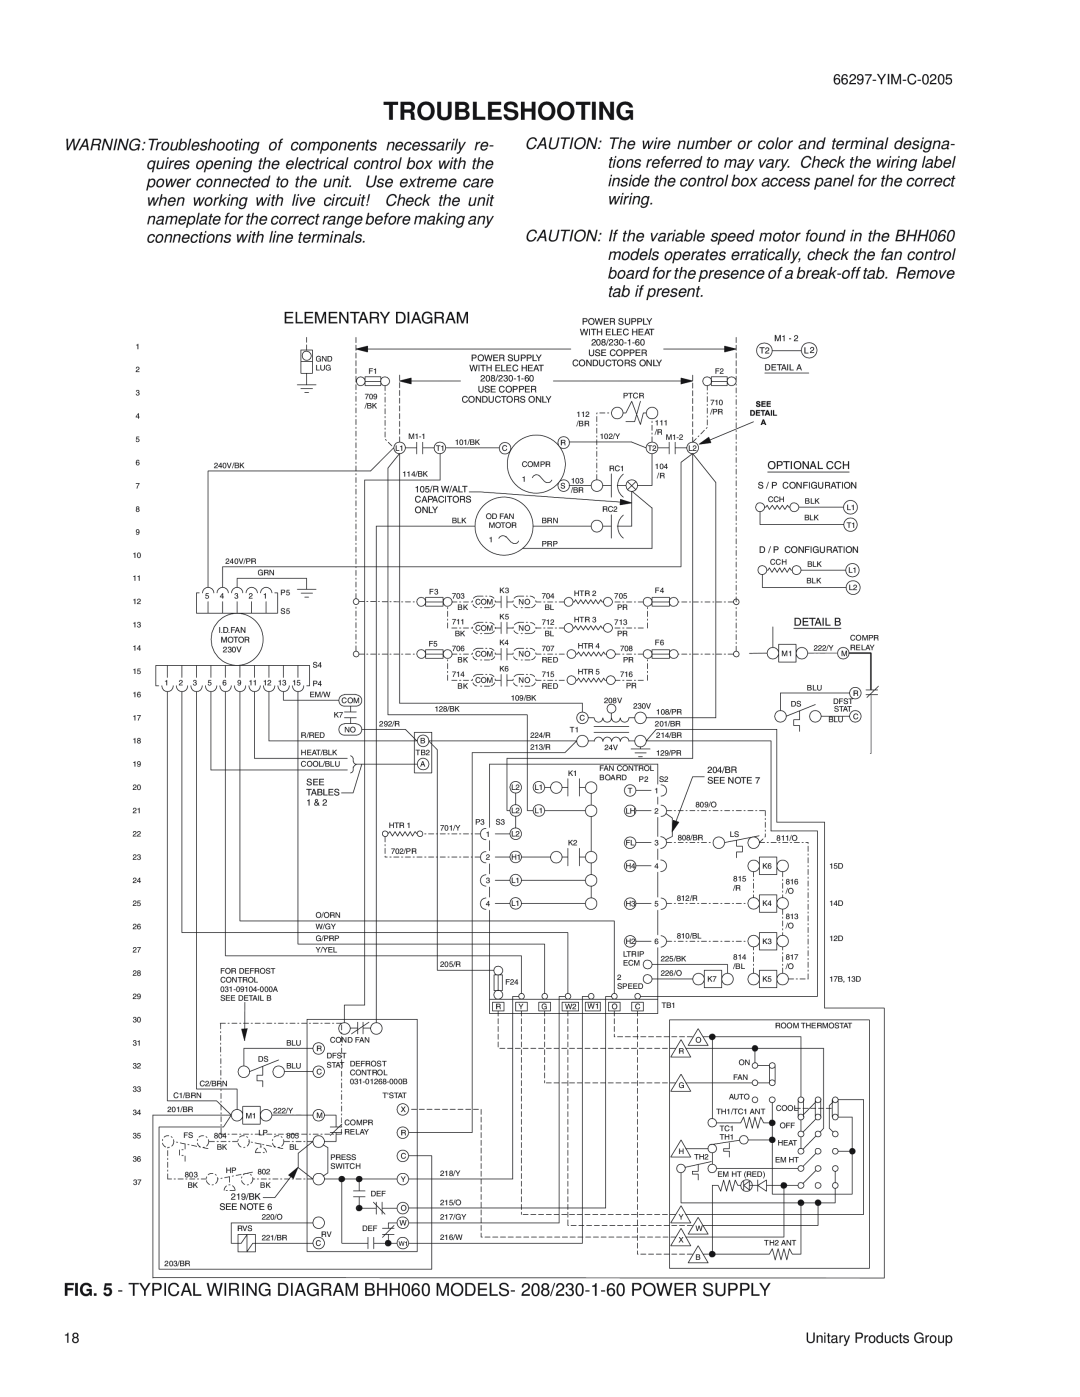 York THRU 060, B1HH018 installation instructions Troubleshooting, Elementary Diagram 